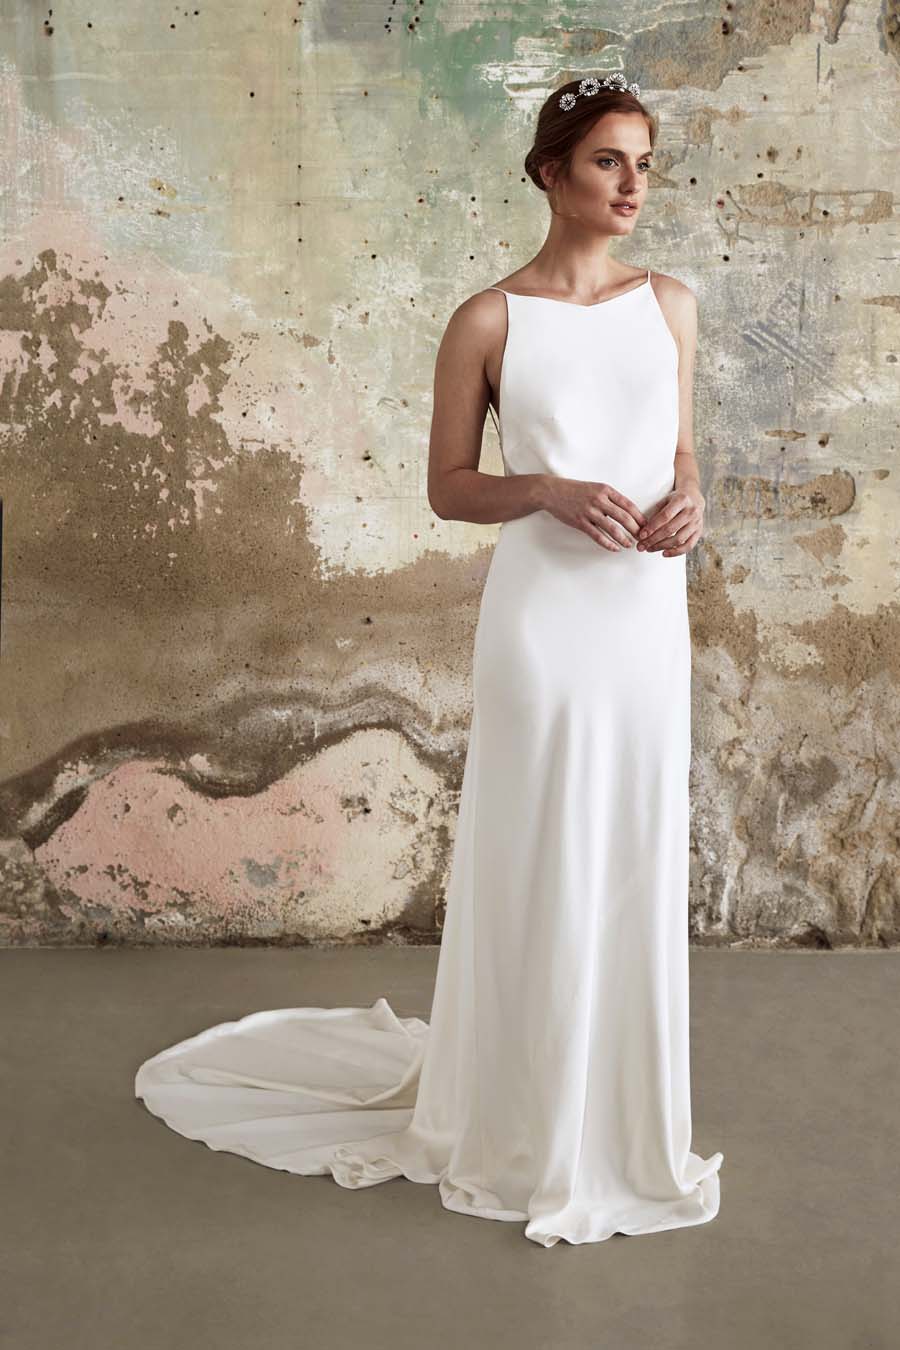 The 2020 Nouveau Wedding Dress Collection by Sabina Motasem